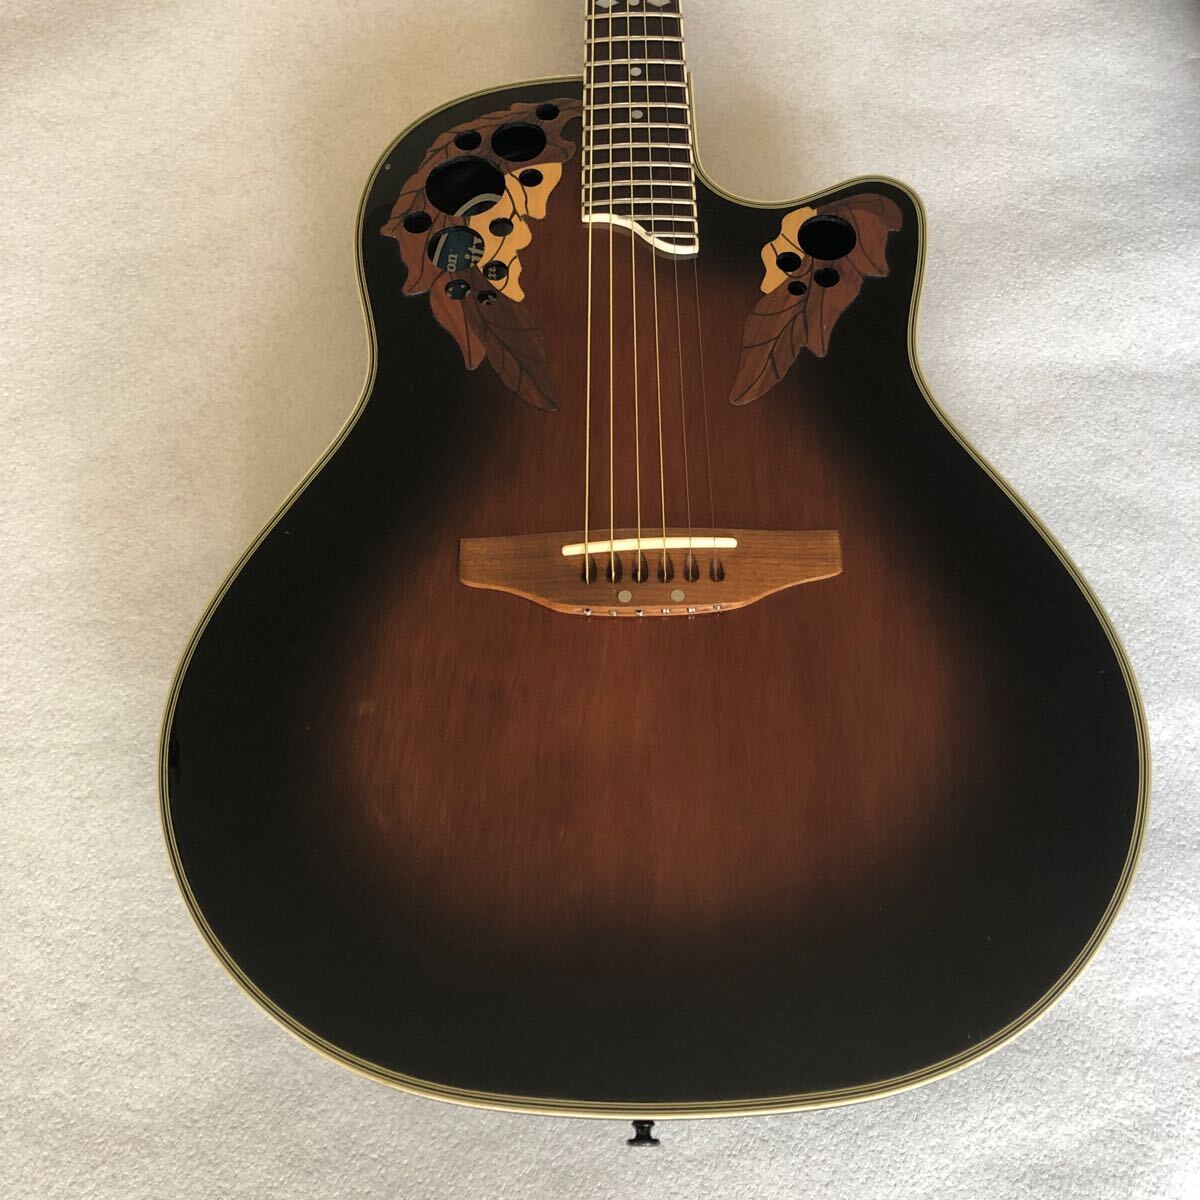 567 Ovation Celebrity エレアコギター  オベーション製アコースティックギター CC257 茶 アコギ用ハードケース付属 美品の画像2